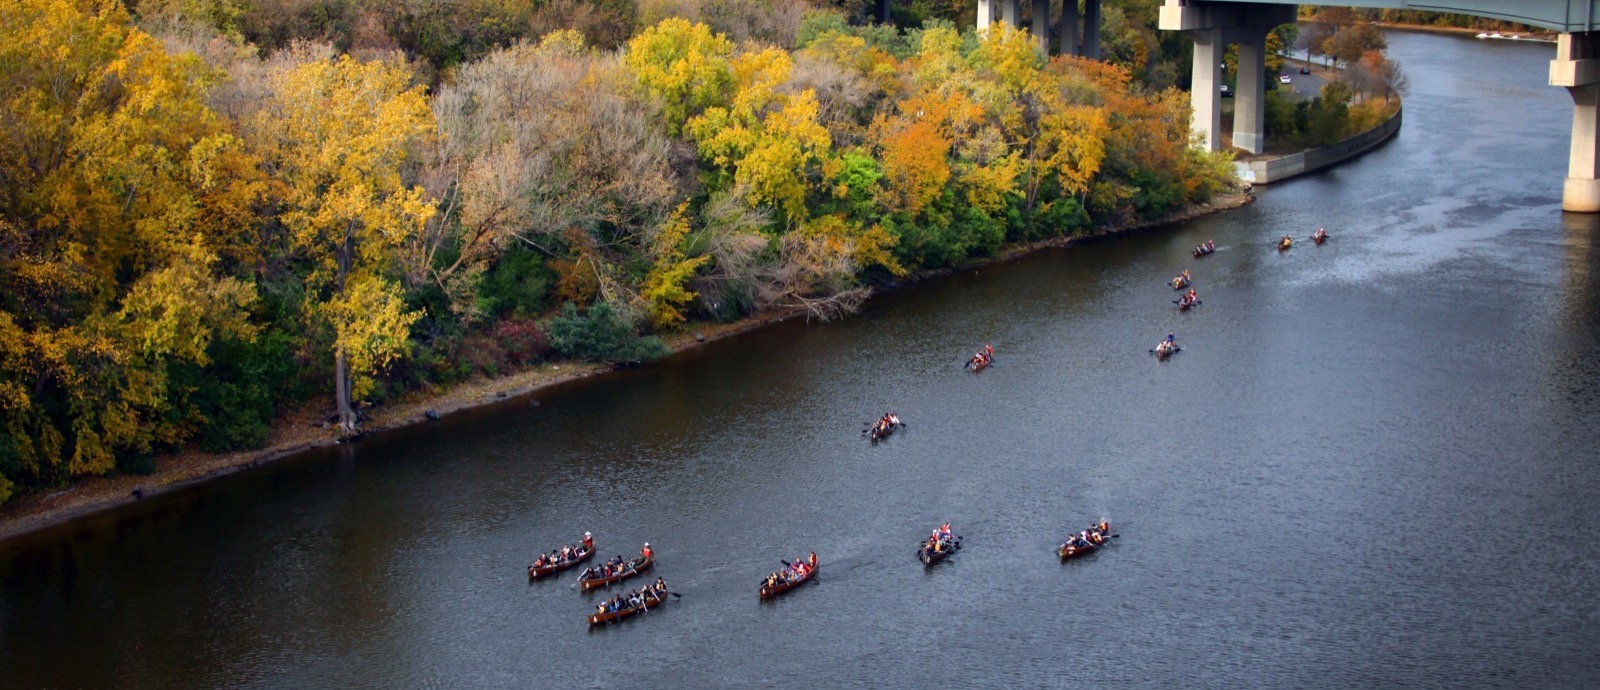 Mississippi River Day Canoe Trip